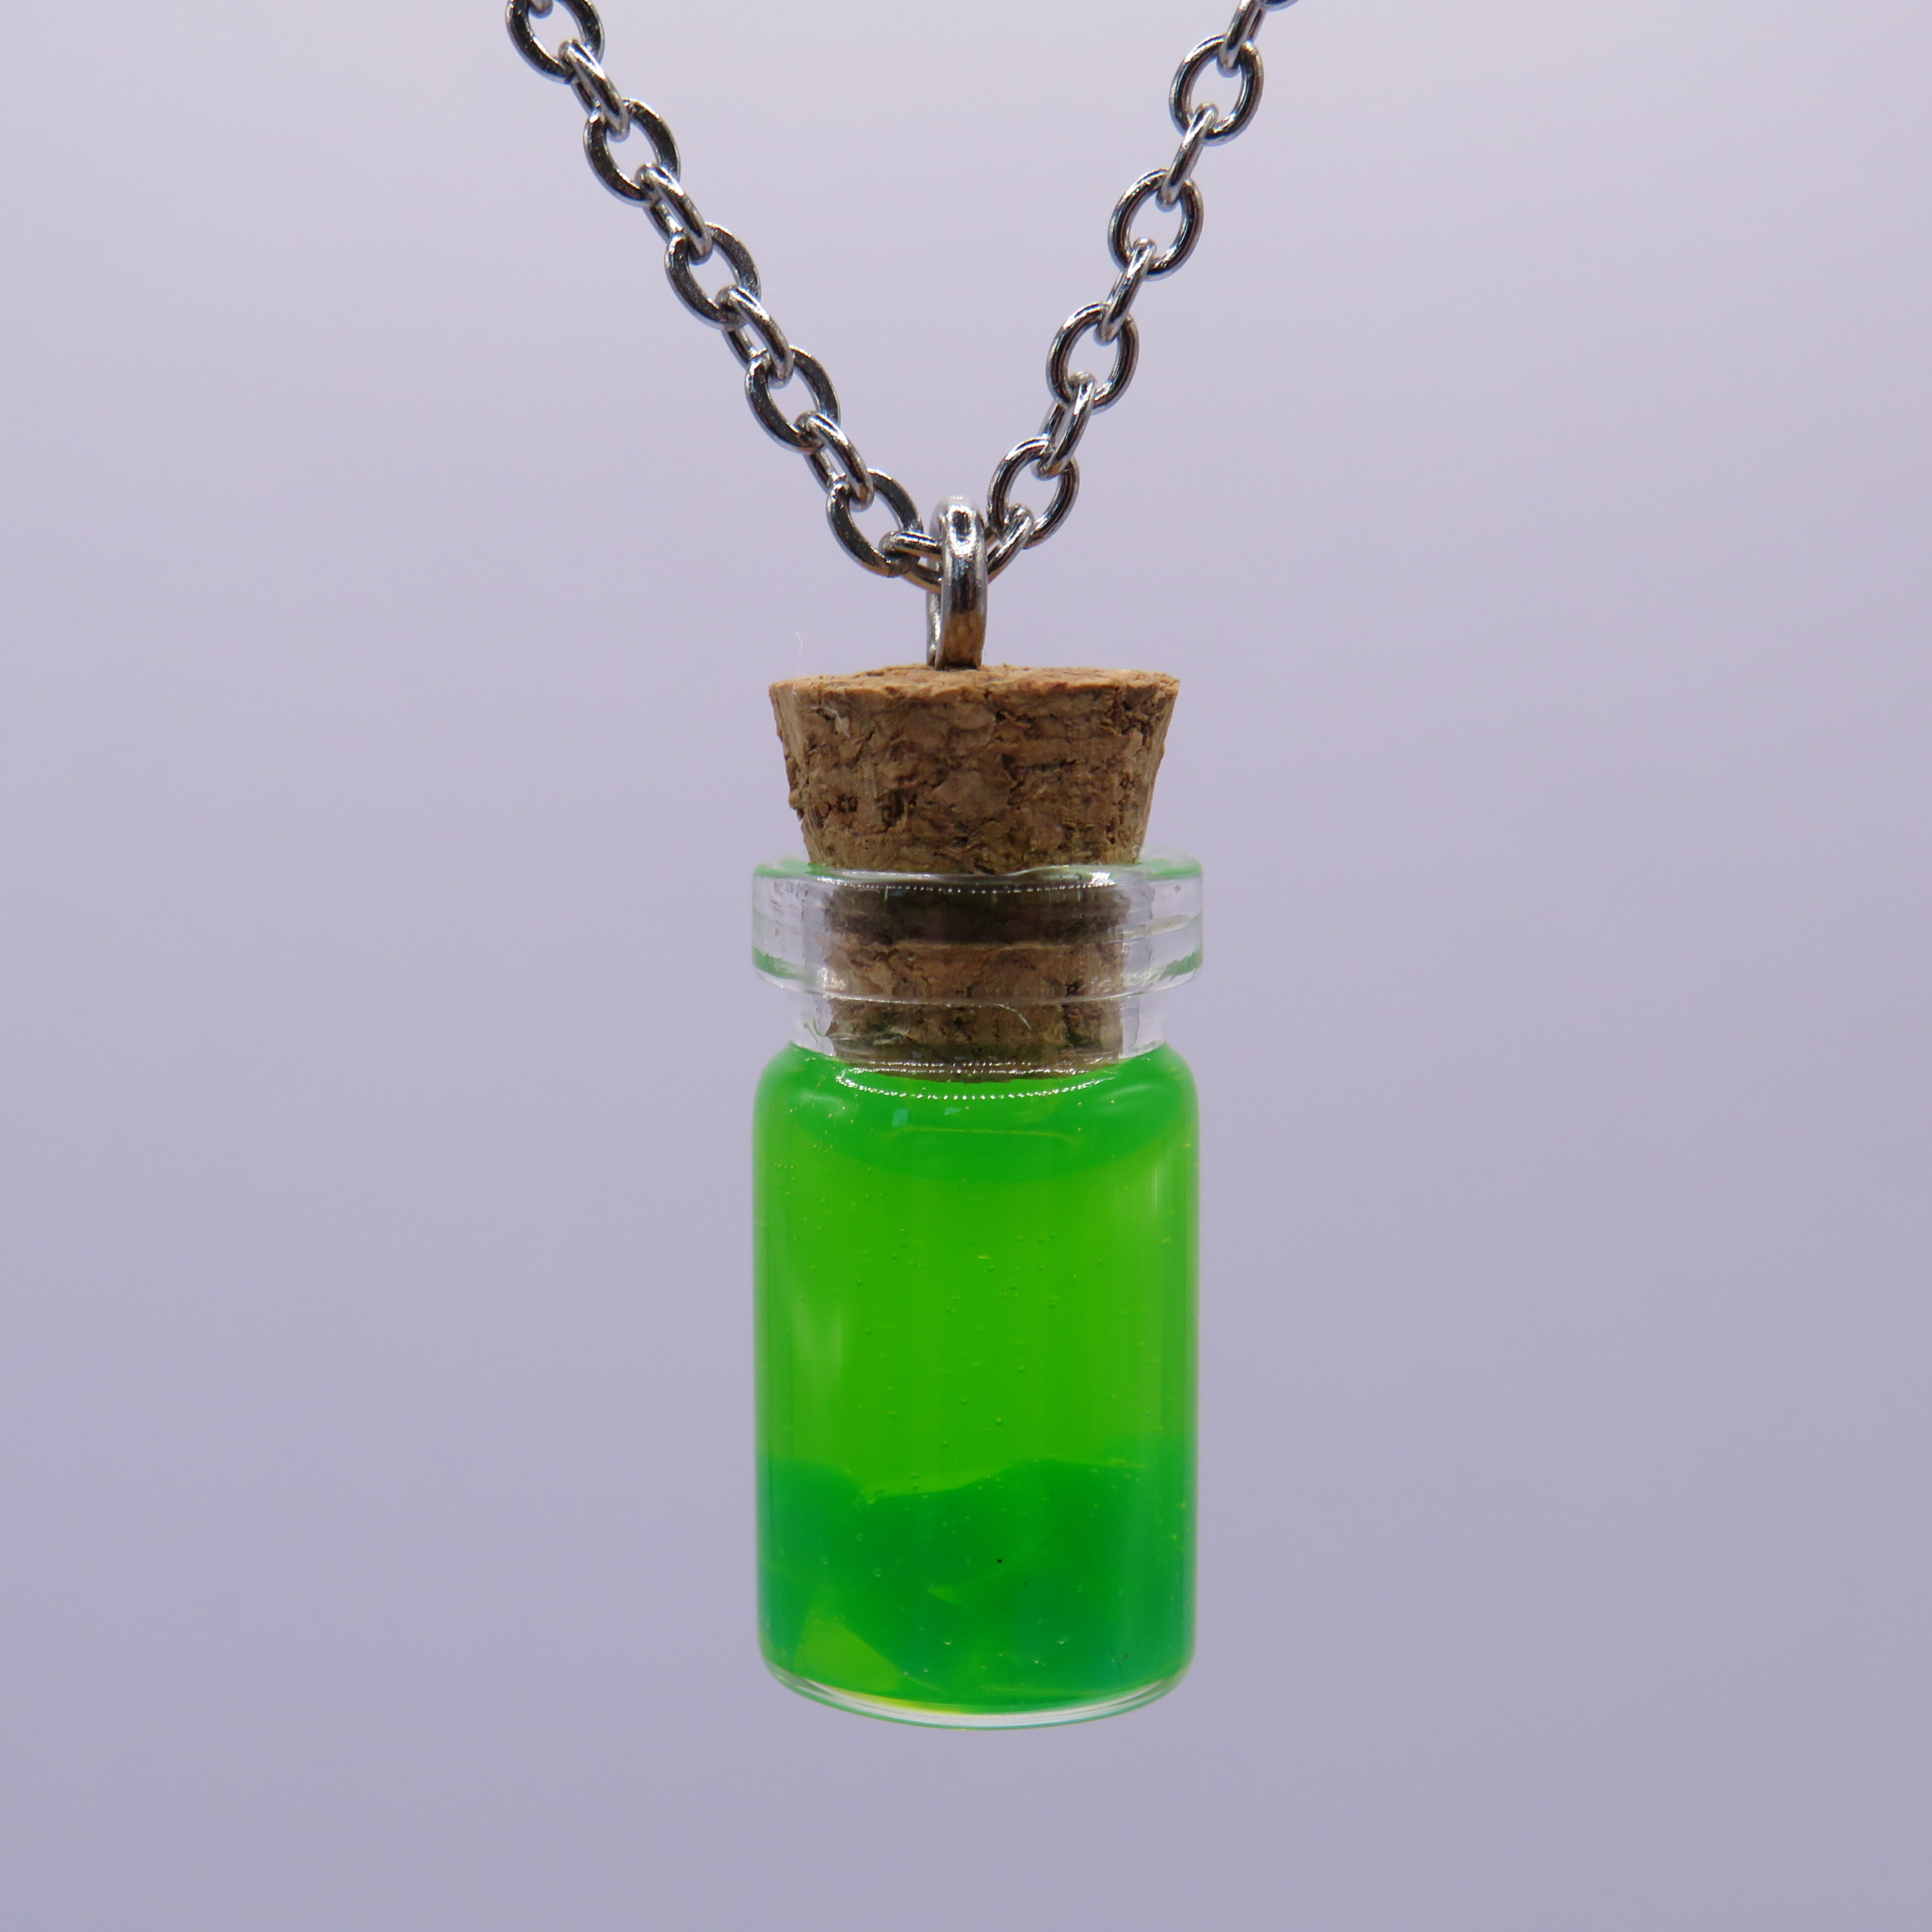 Stainless Steel Neon Green Mini Glass Bottle Pendant Necklace